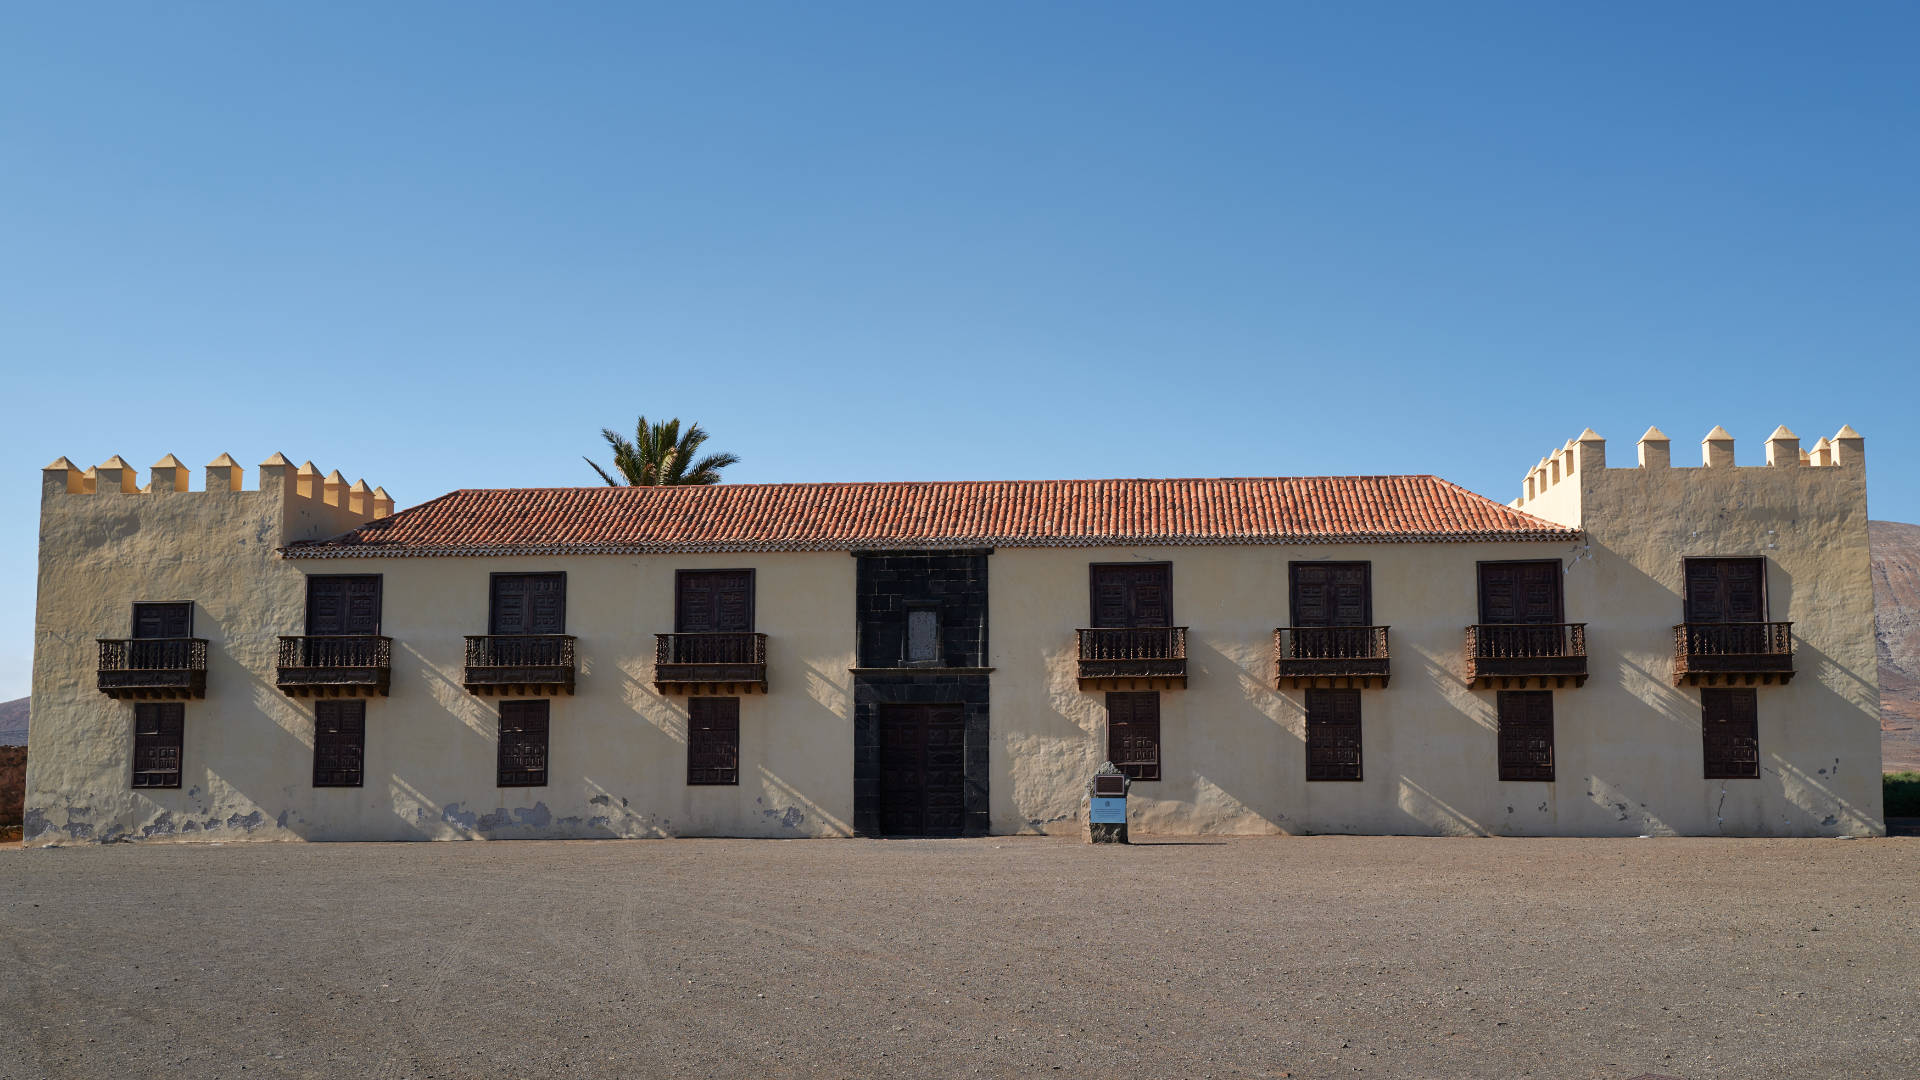 Casa de los Coroneles La Oliva Fuerteventura.